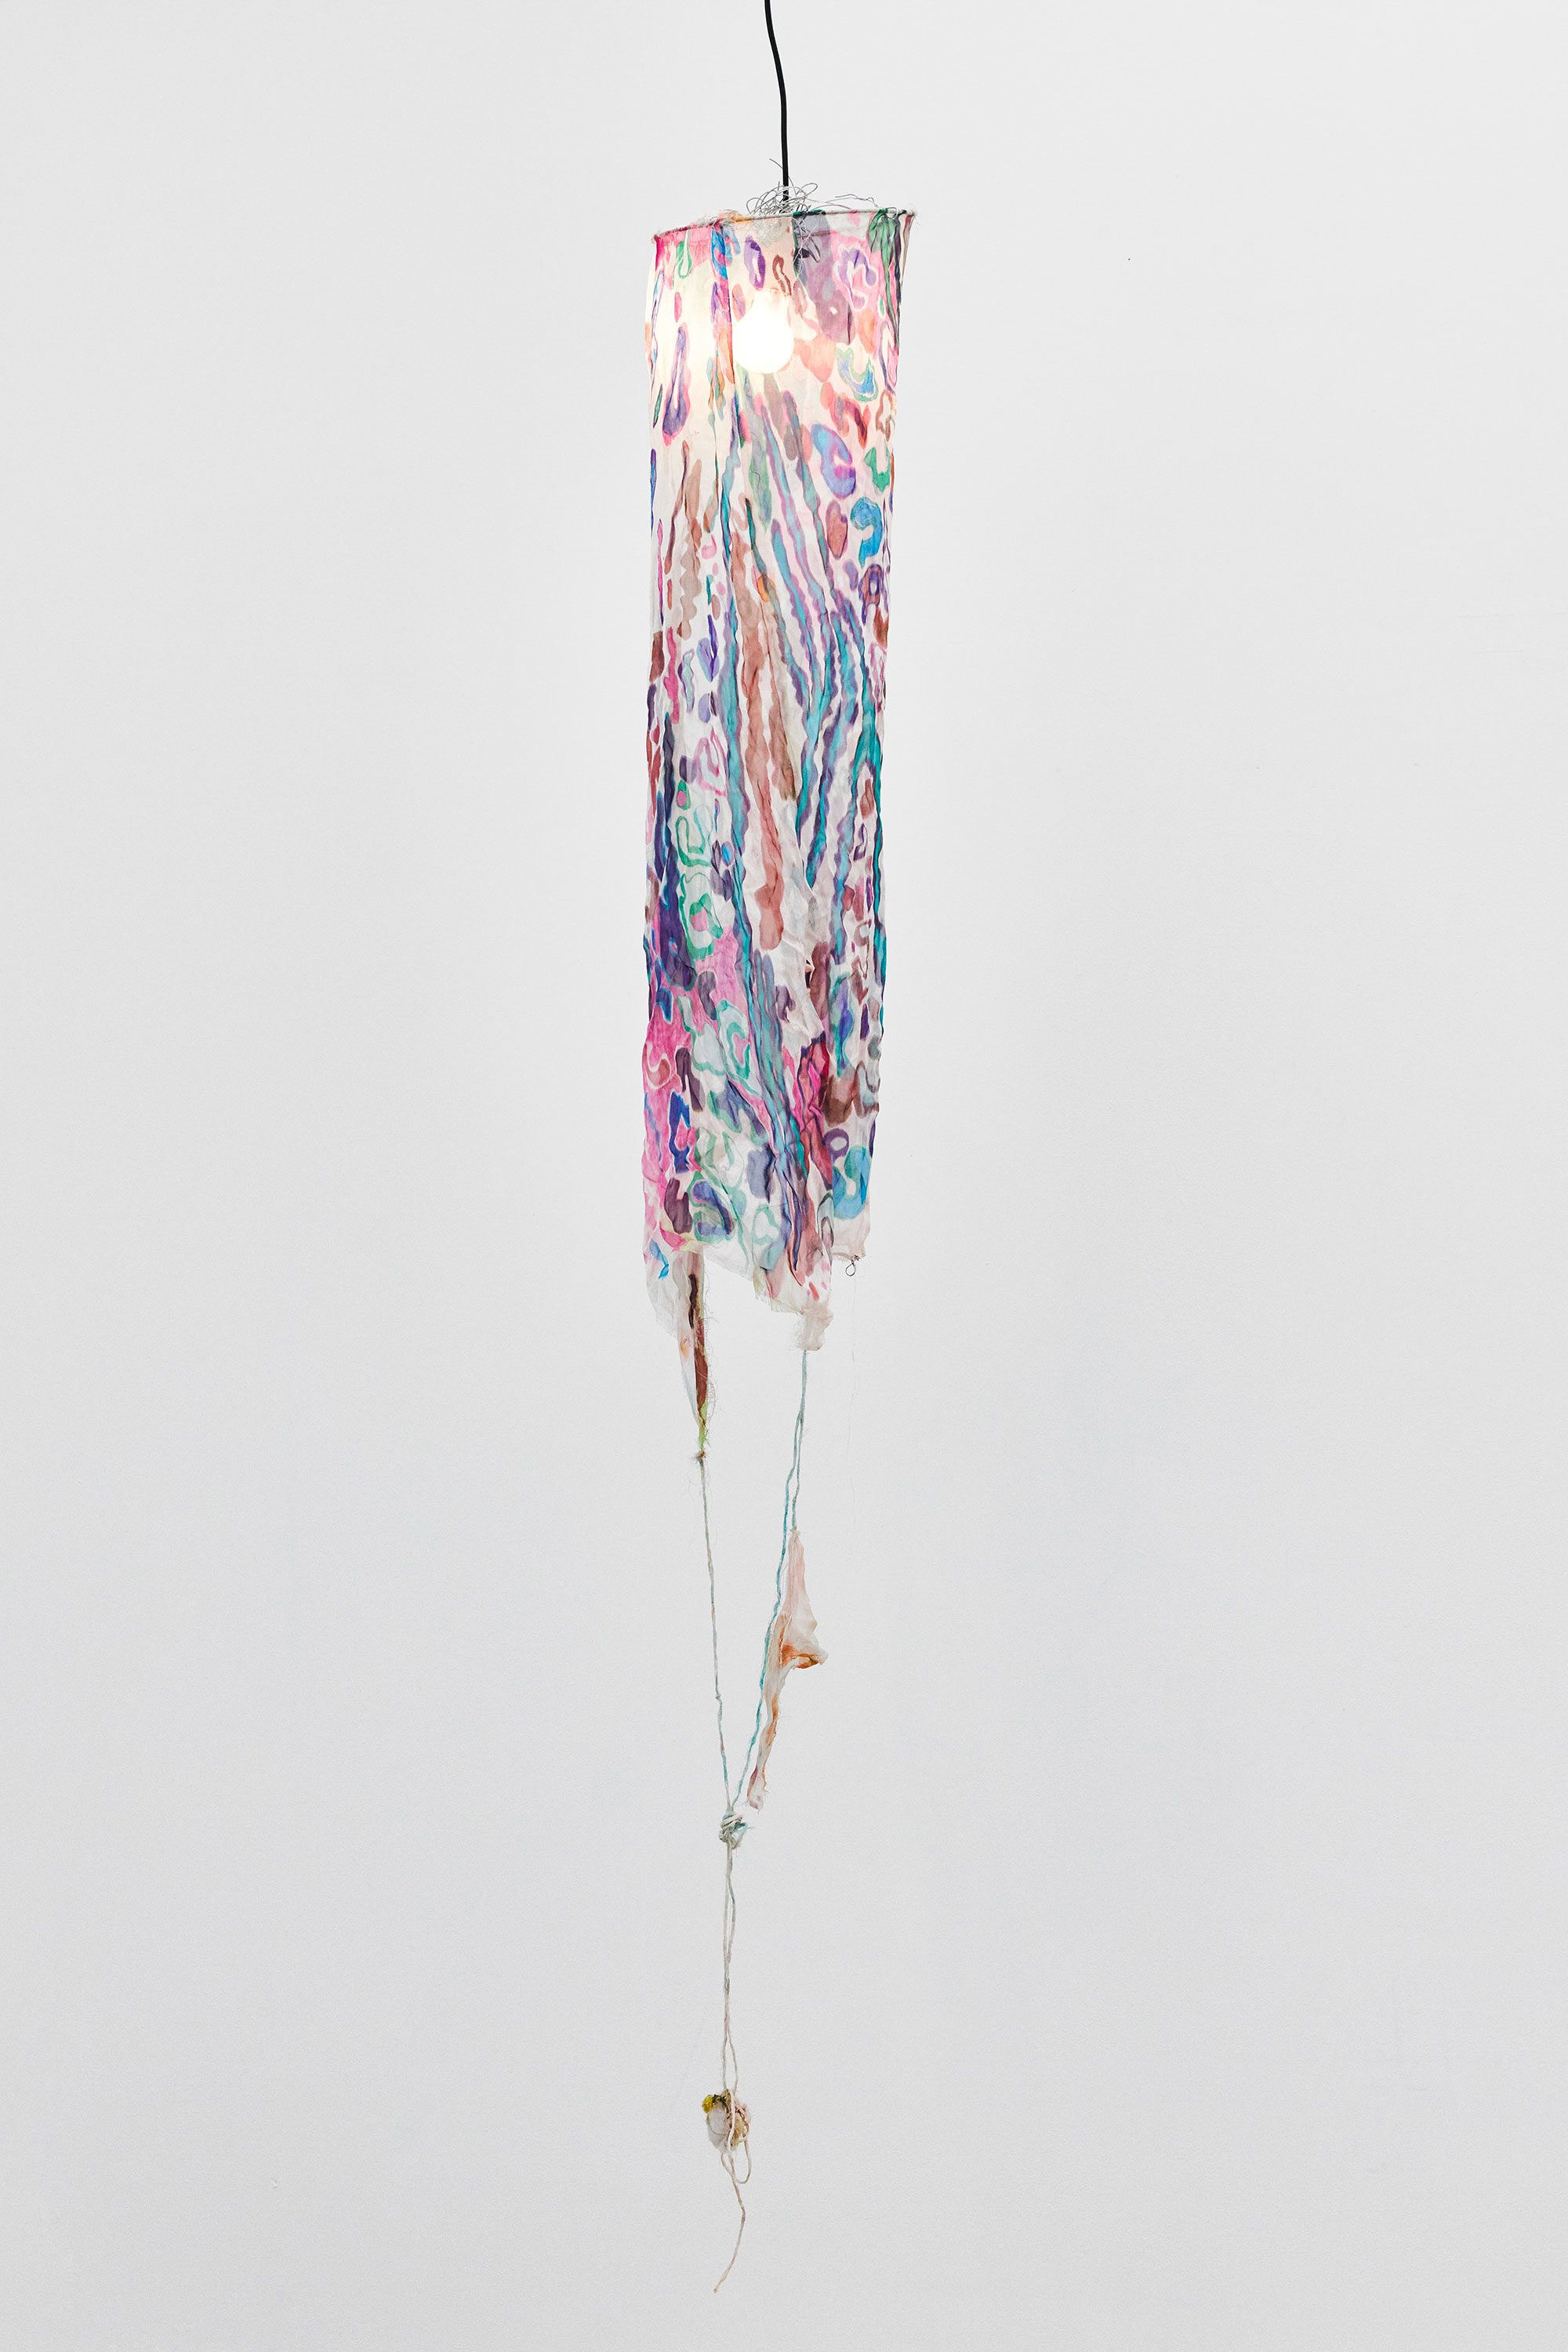 Anne Bourse, *Charlotte’s skirt from Tokyo*, 2022, Ink, felt pen, silk, wire